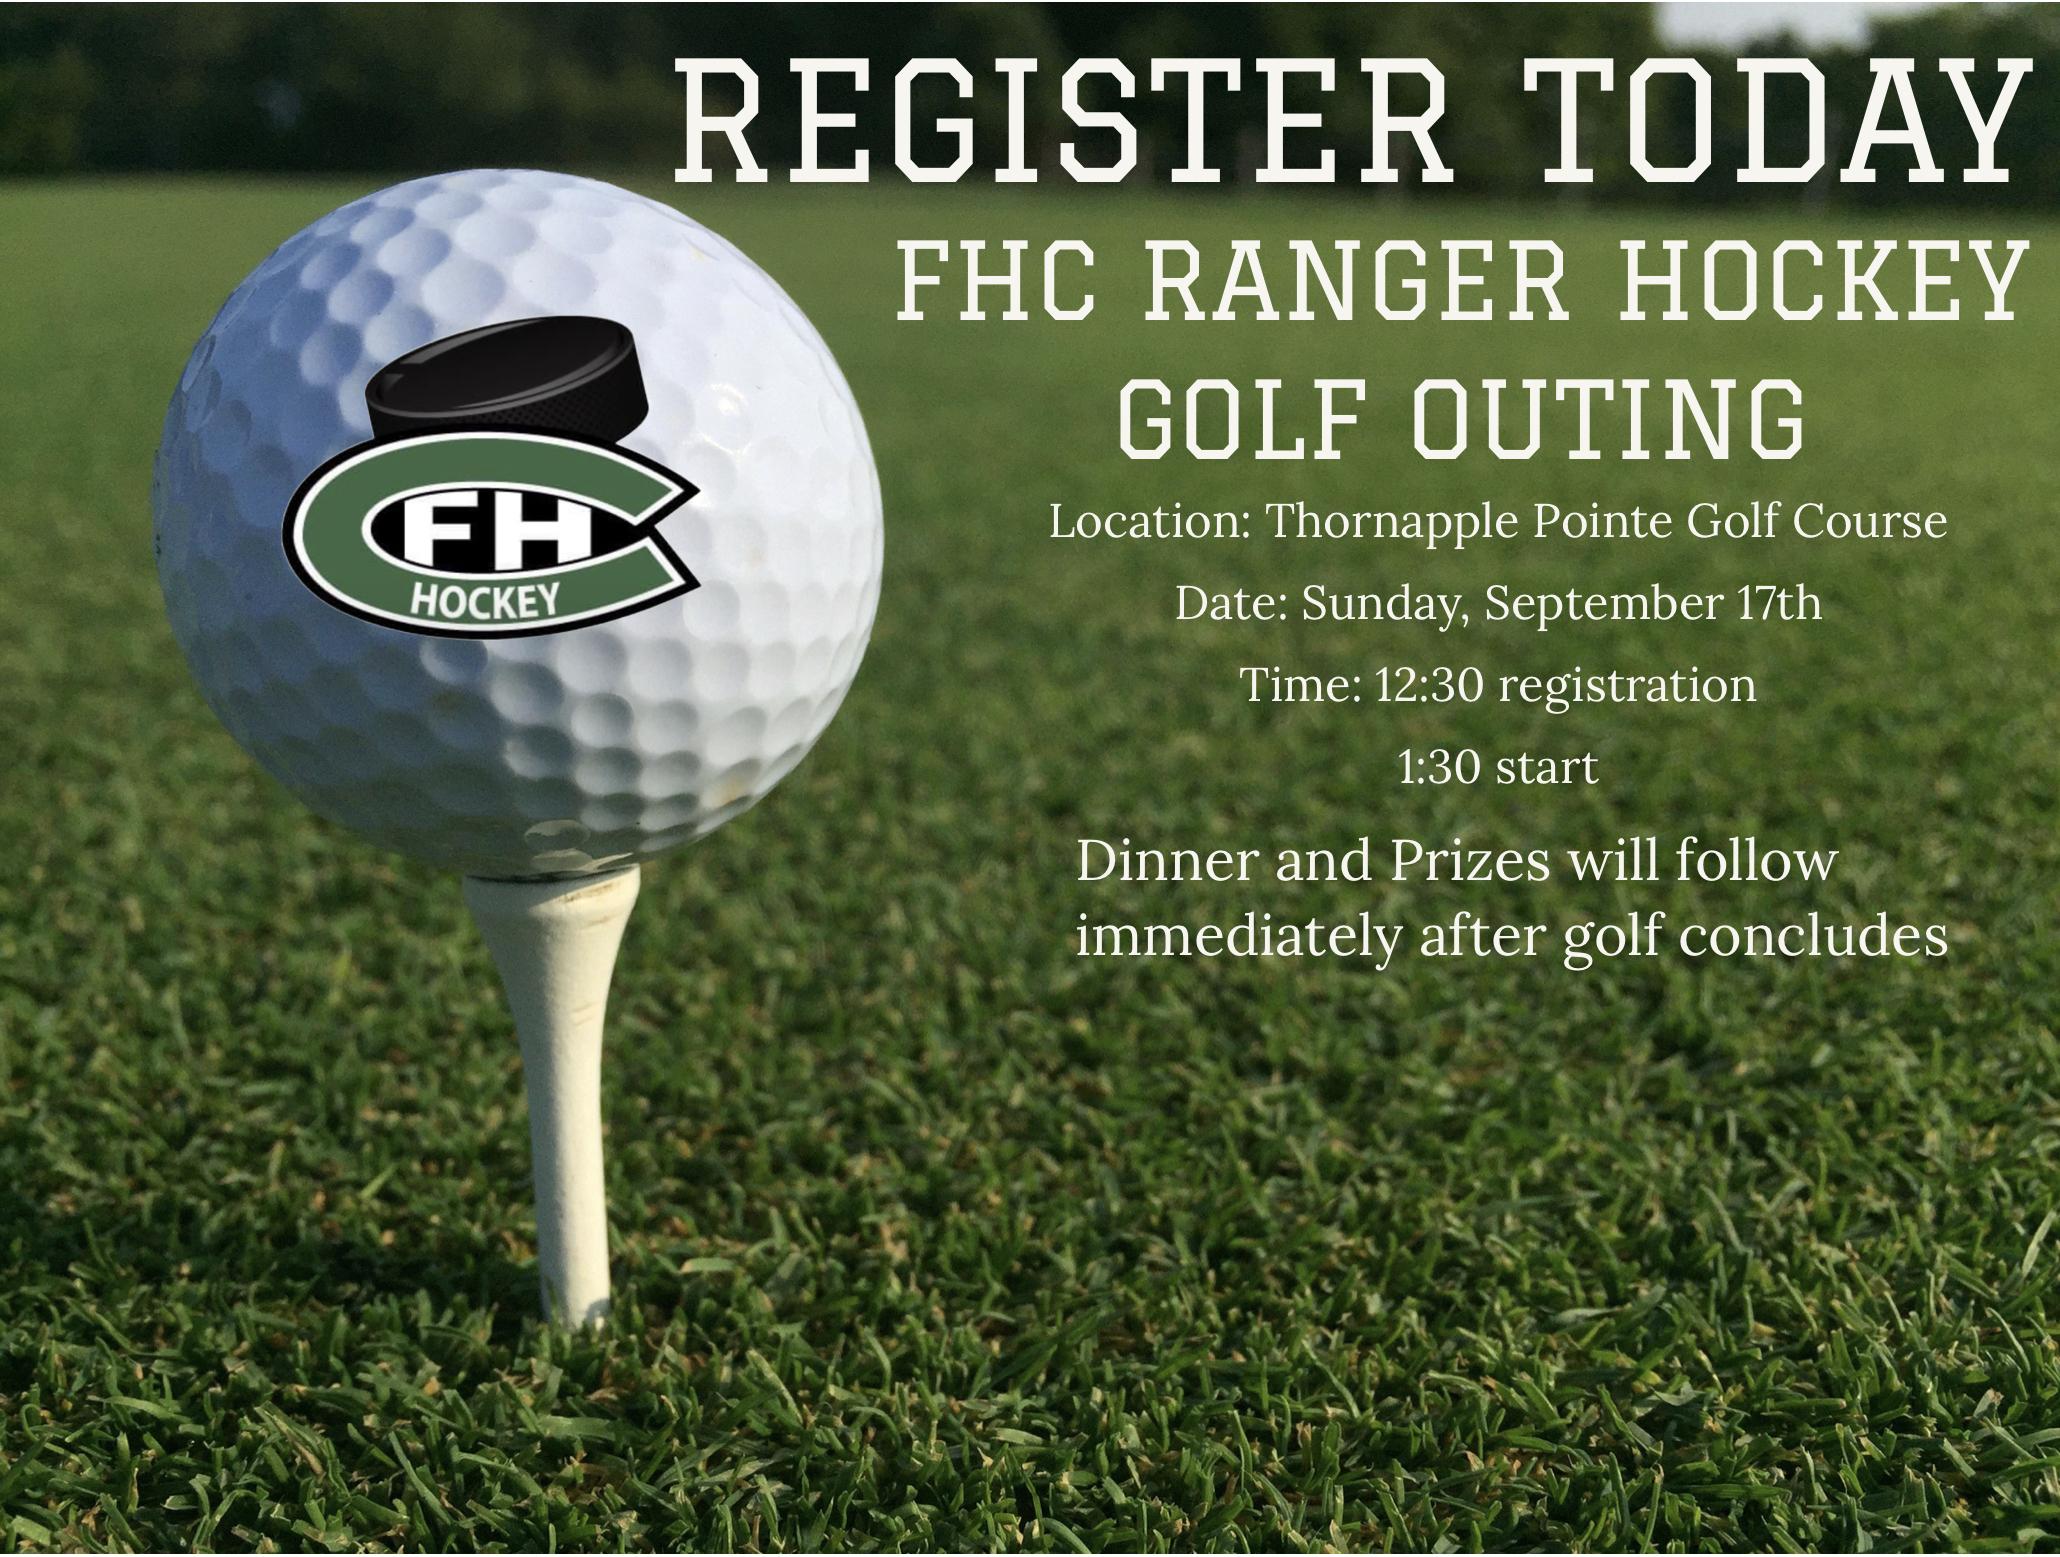 FHC Ranger Hockey Annual Golf Outing